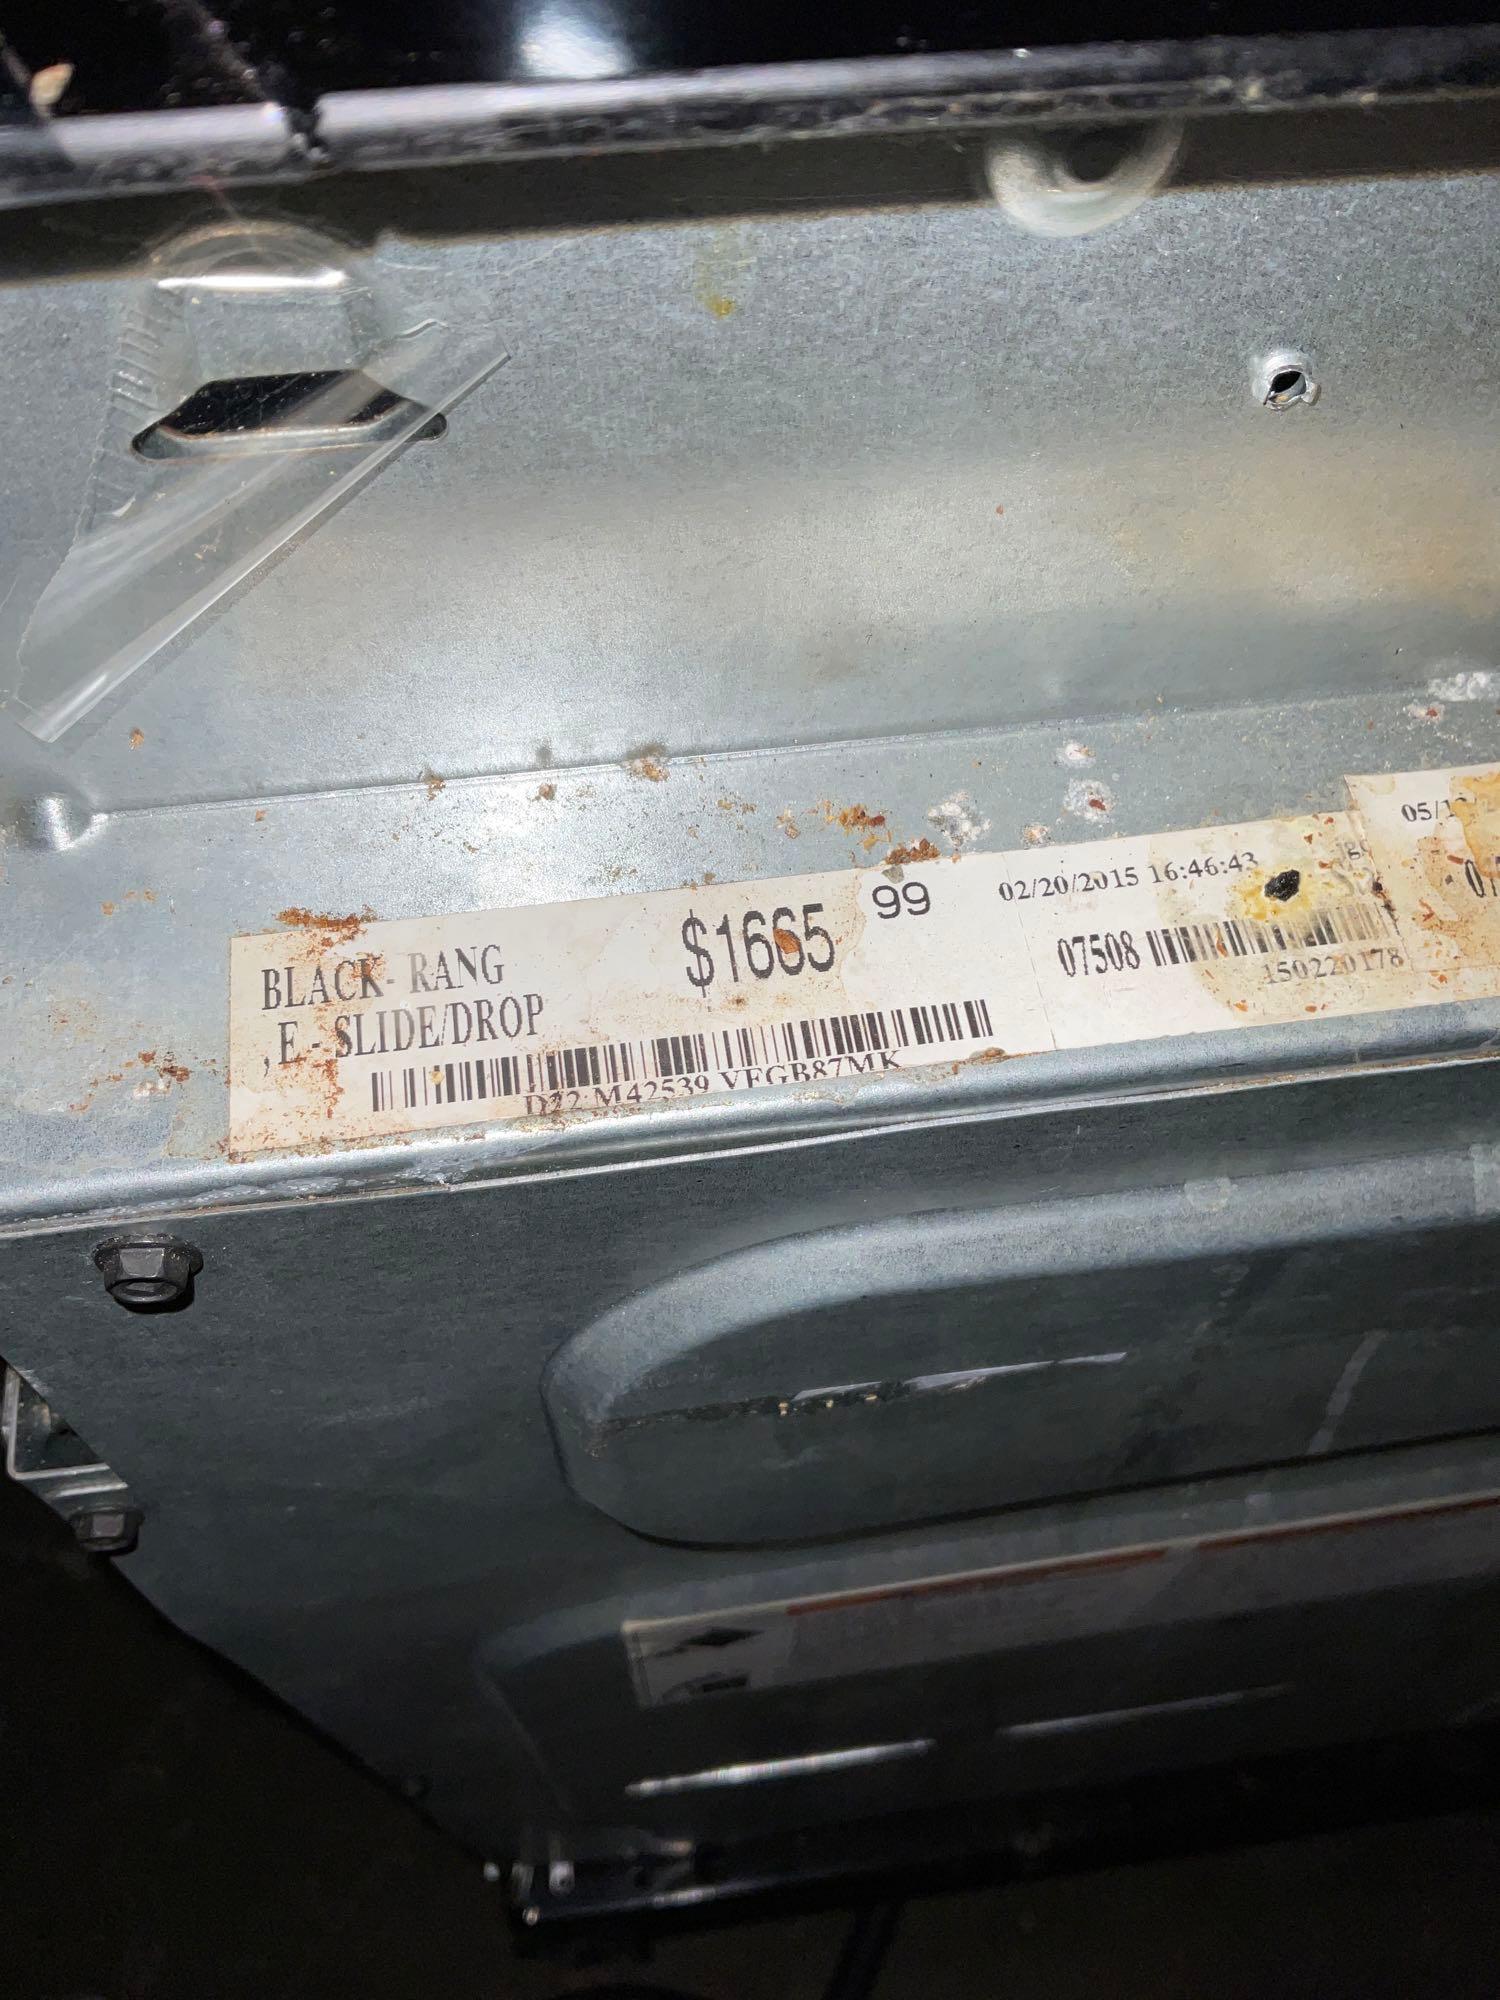 Sears Black Range Slide Drop Electric Oven/ Stovetop - Back Glass is Damaged - Still functional